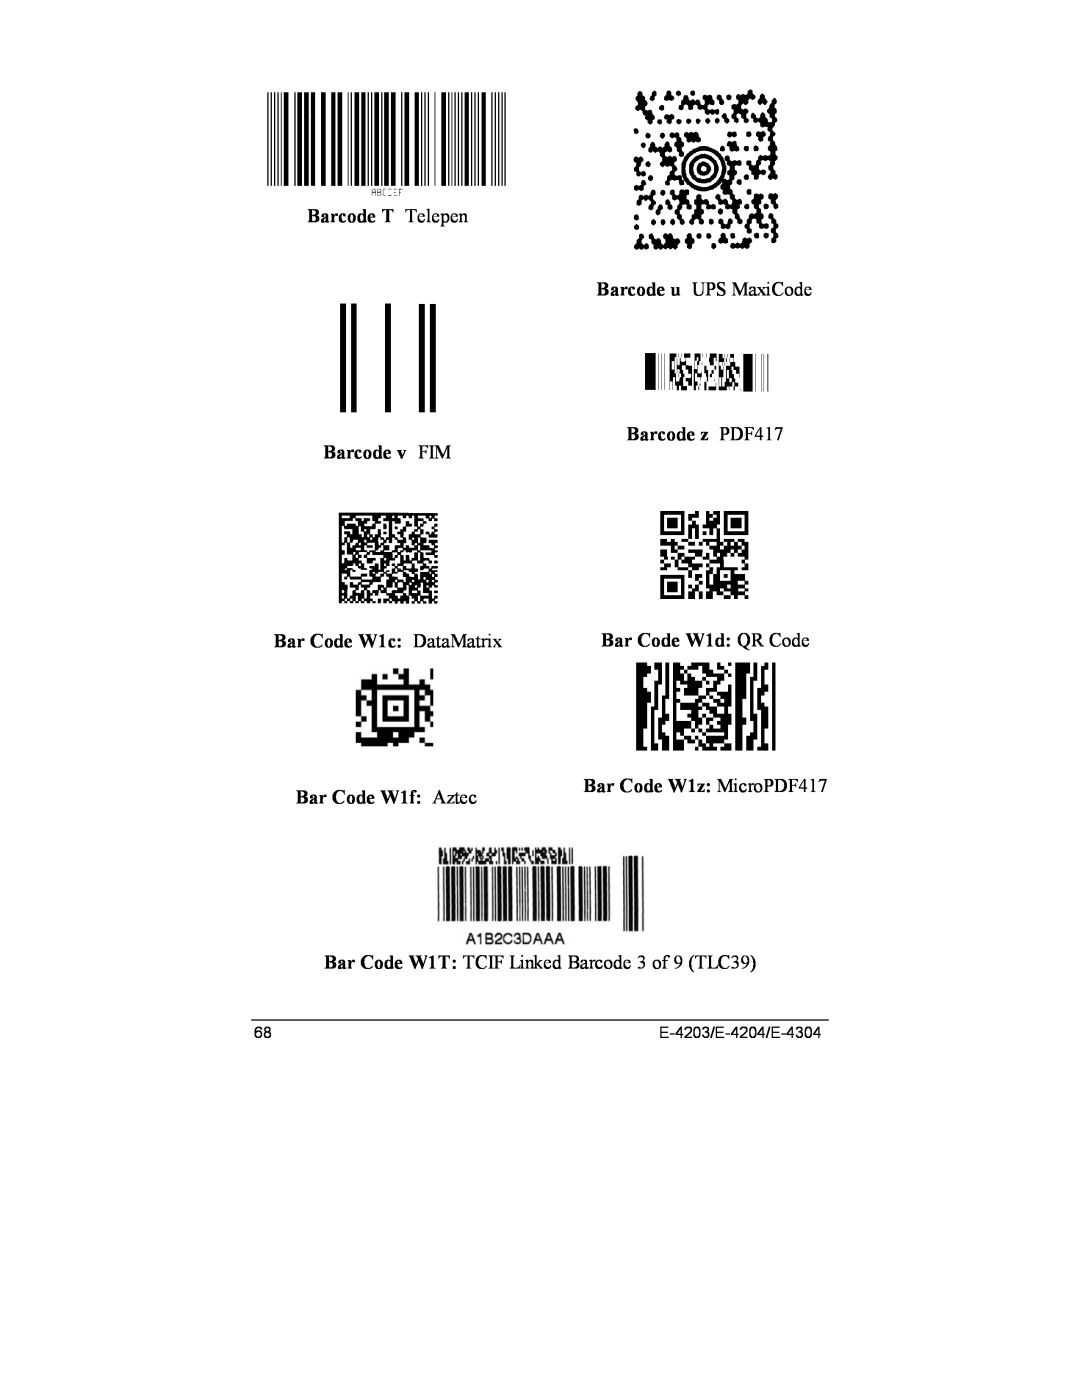 Datamax E-4203, E-4204 Barcode T Telepen, Barcode u UPS MaxiCode, Barcode z PDF417 Barcode v FIM, Bar Code W1c DataMatrix 